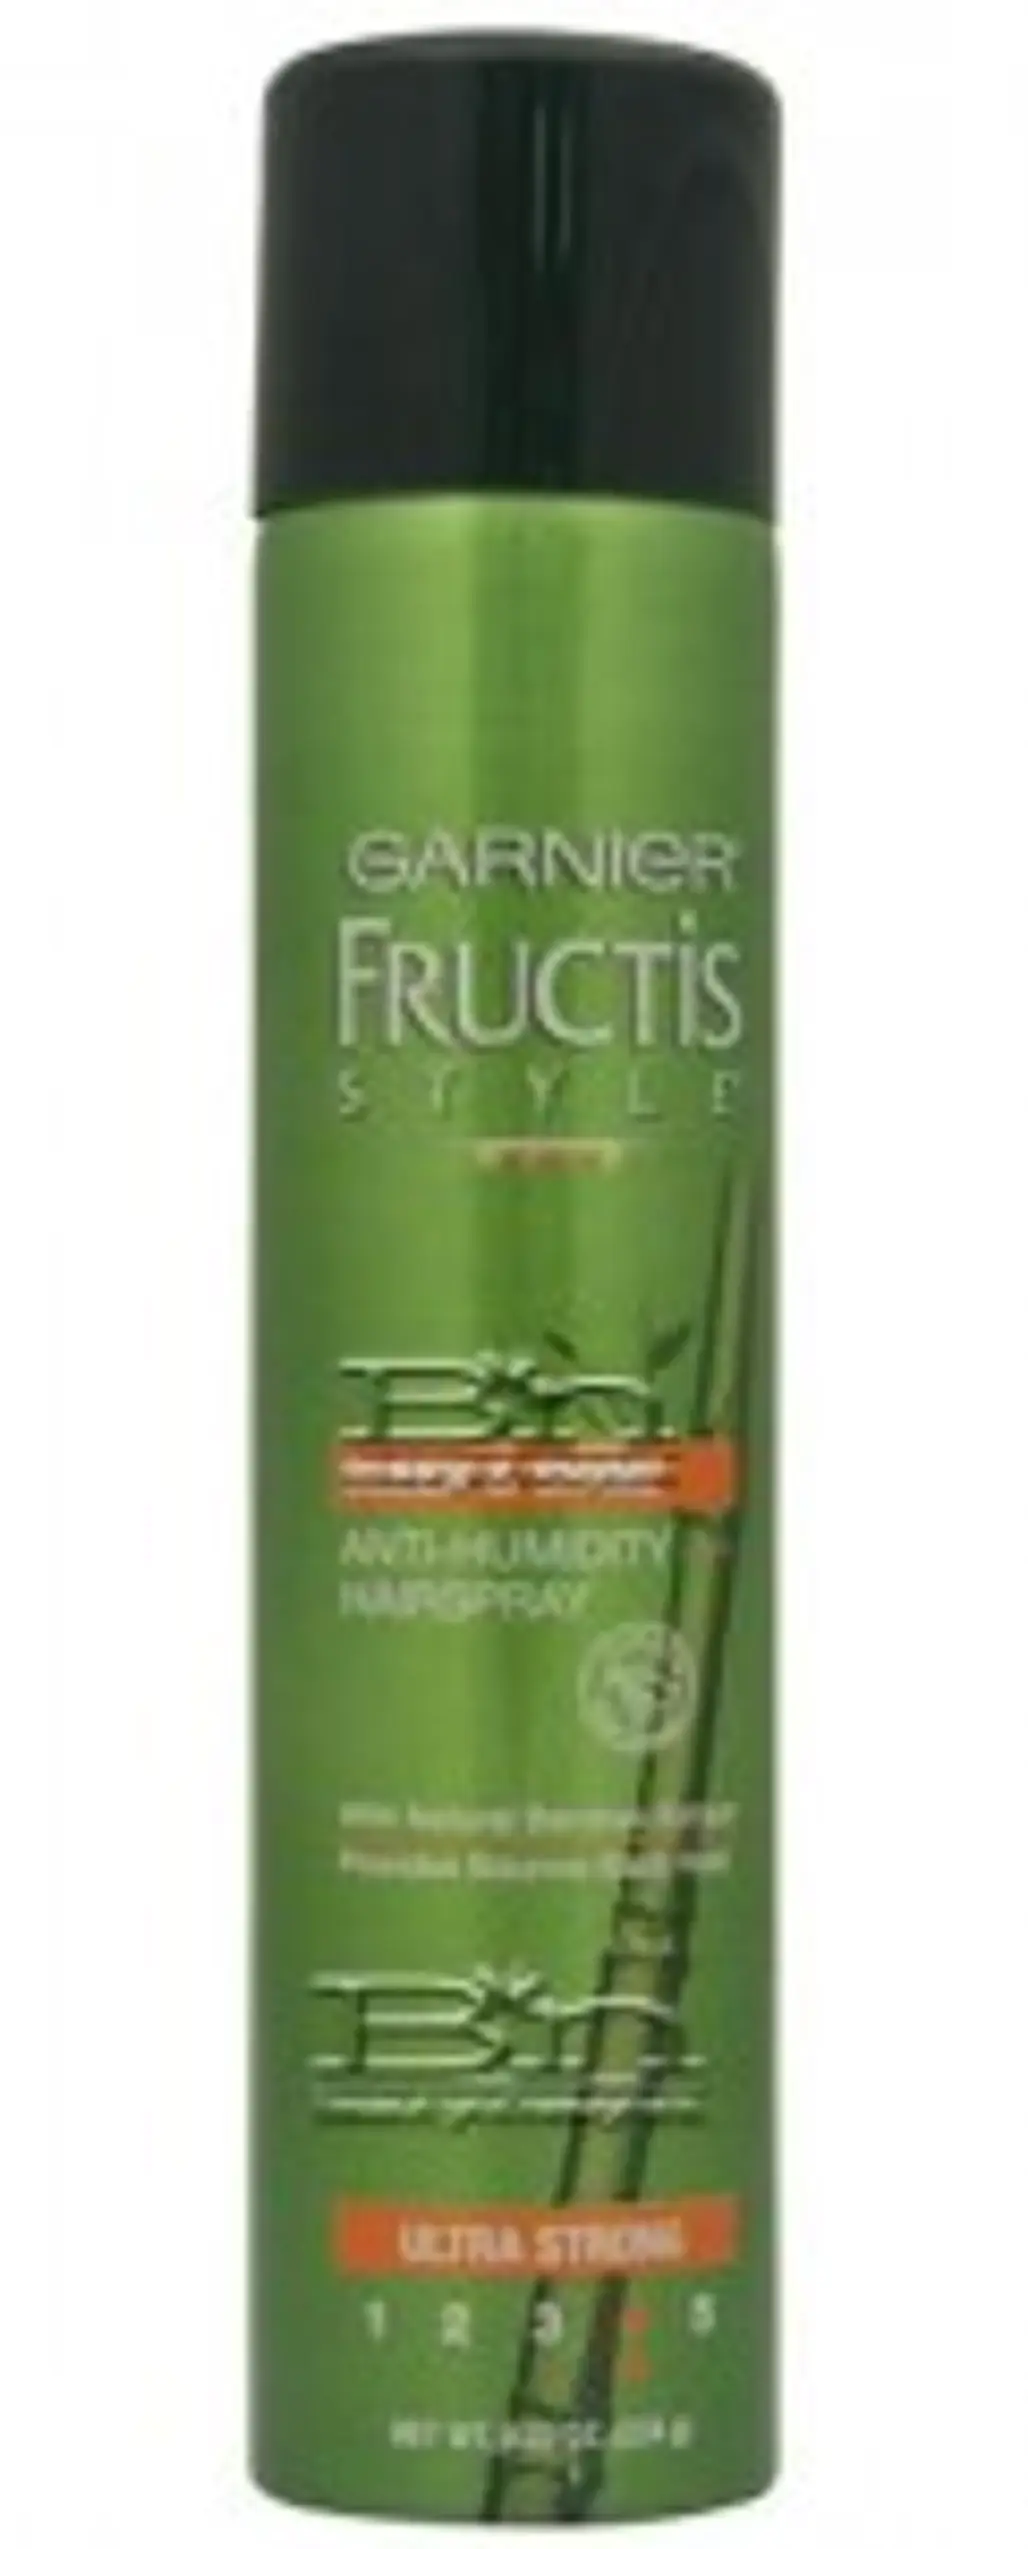 Garnier Fructis Style Sleek and Shine anti-Humidity Hair Spray